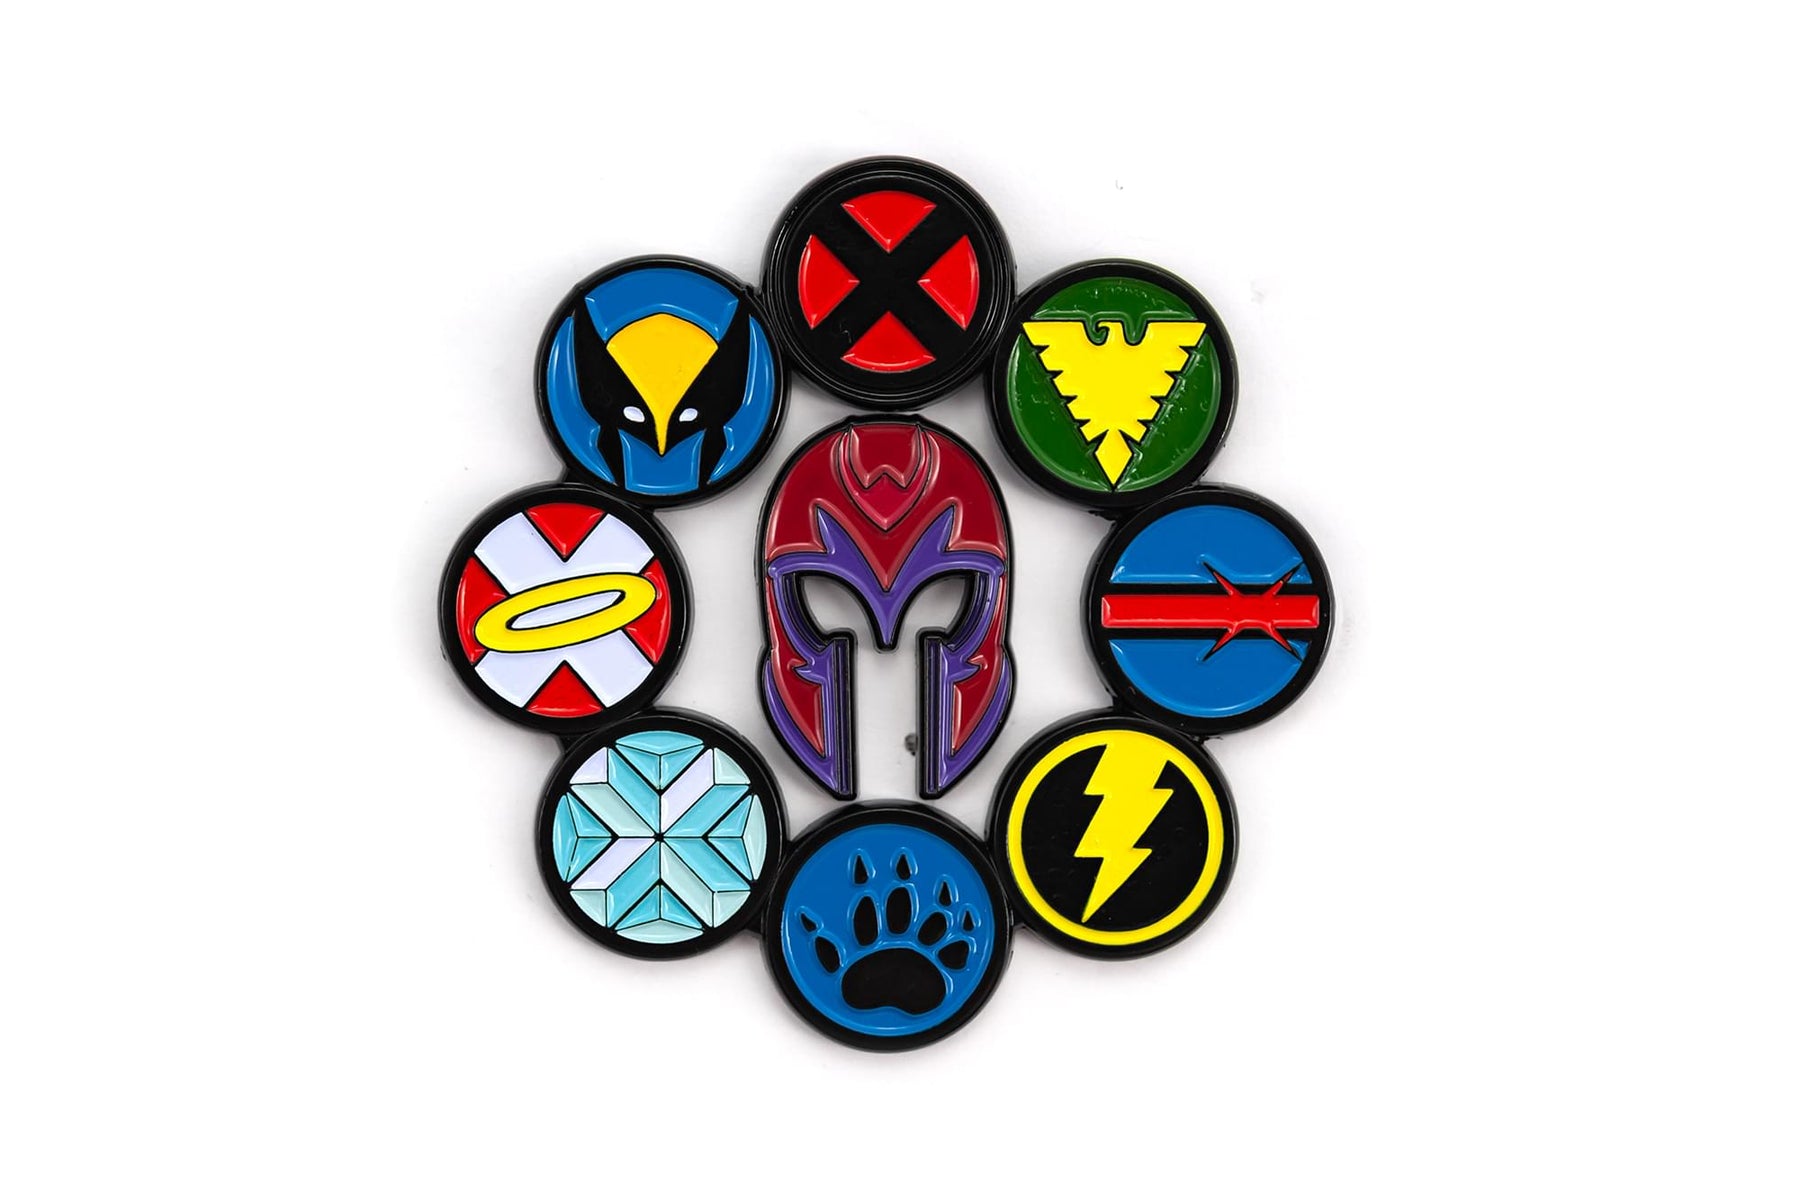 X-Men Superhero Pin | Exclusive Marvel X-Men Collectible Pin